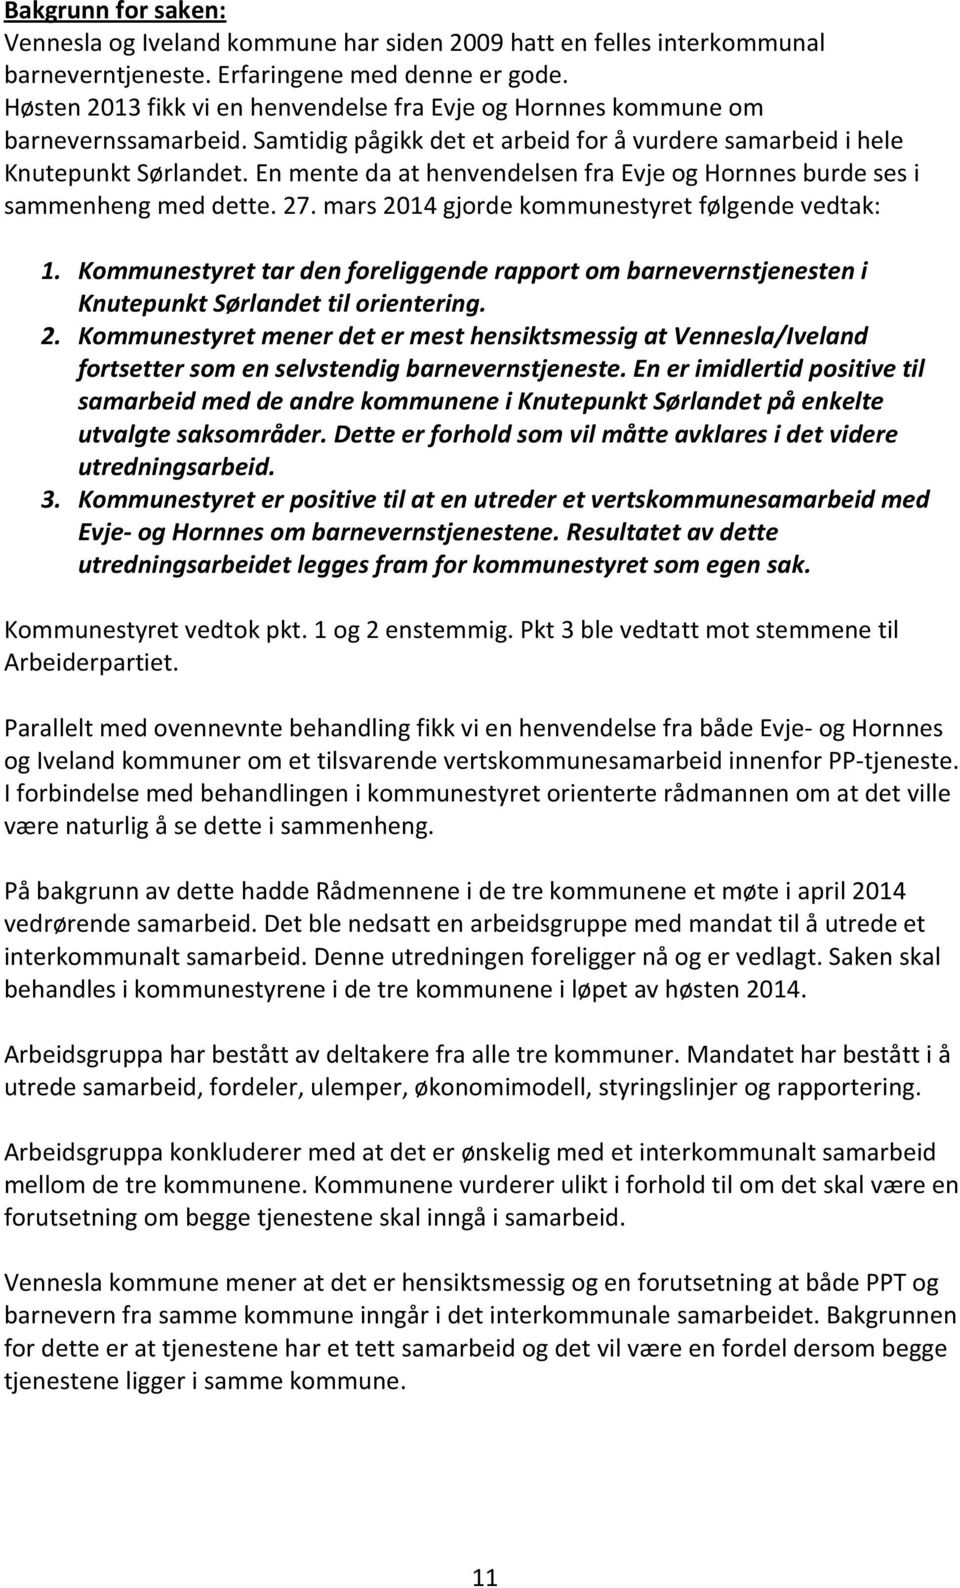 En mente da at henvendelsen fra Evje og Hornnes burde ses i sammenheng med dette. 27. mars 2014 gjorde kommunestyret følgende vedtak: 1.